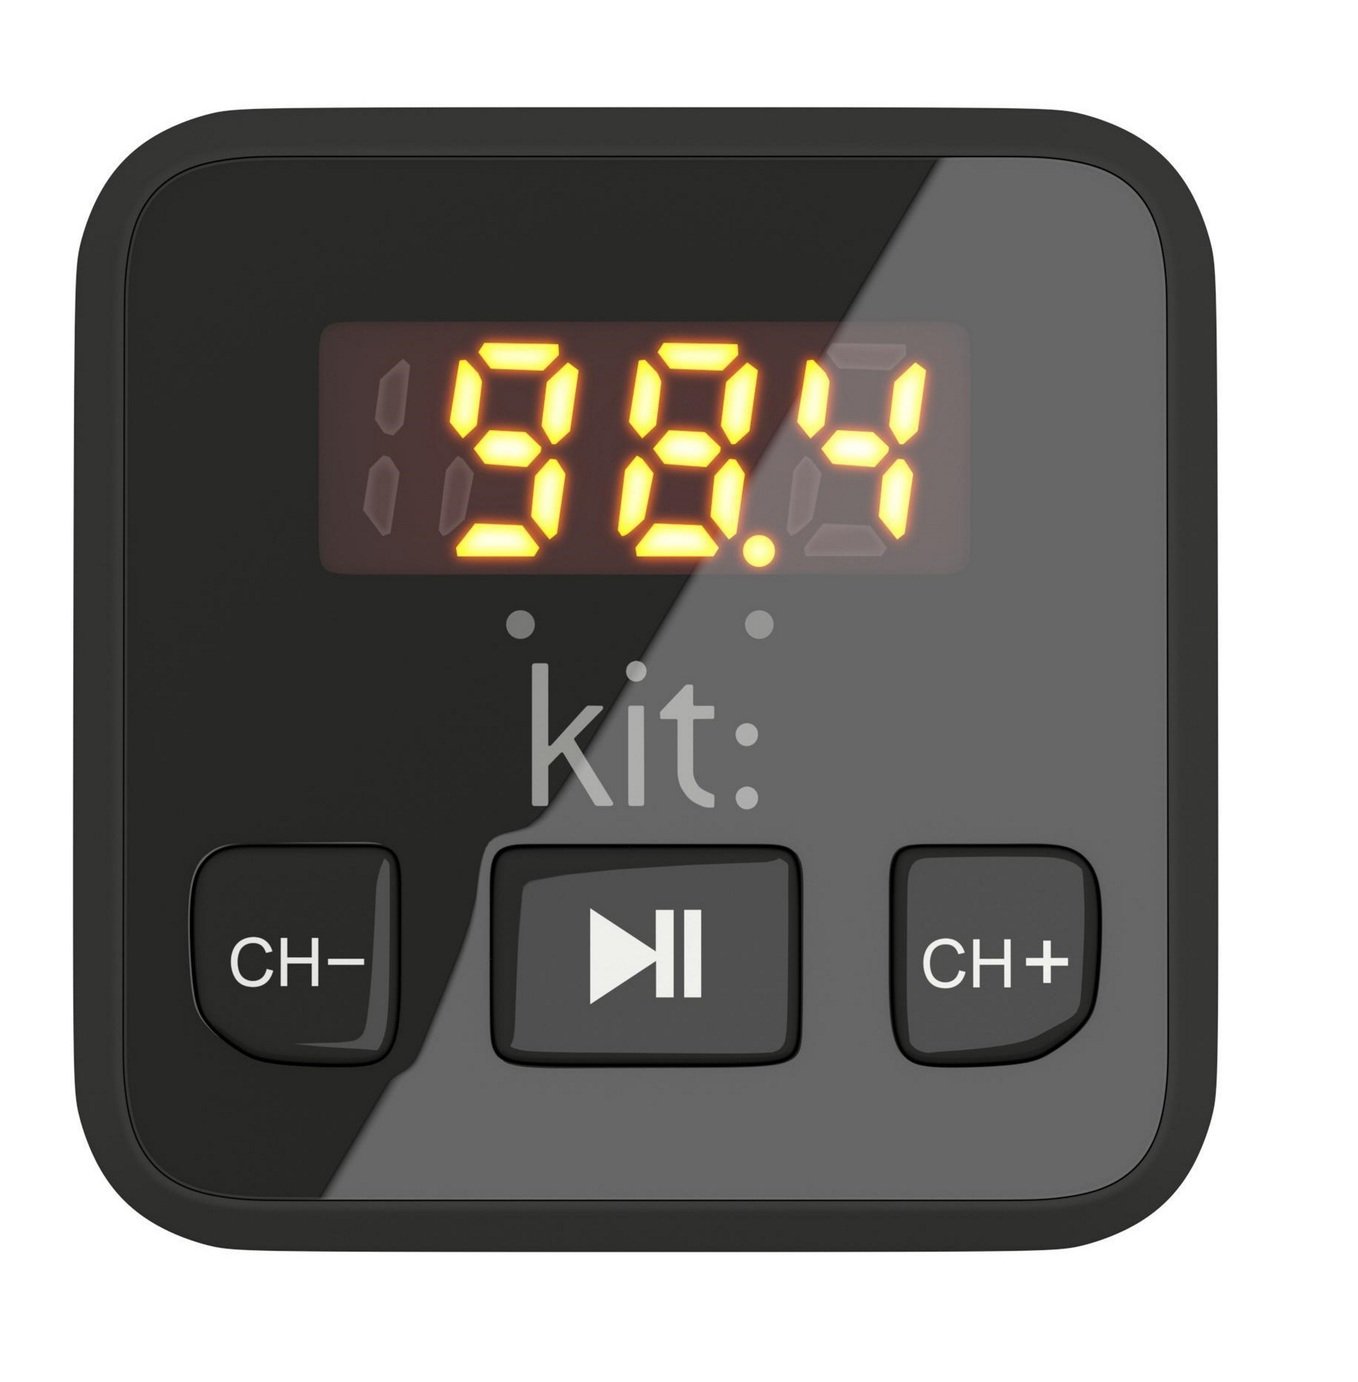 Kit Bluetooth FM Transmitter Review